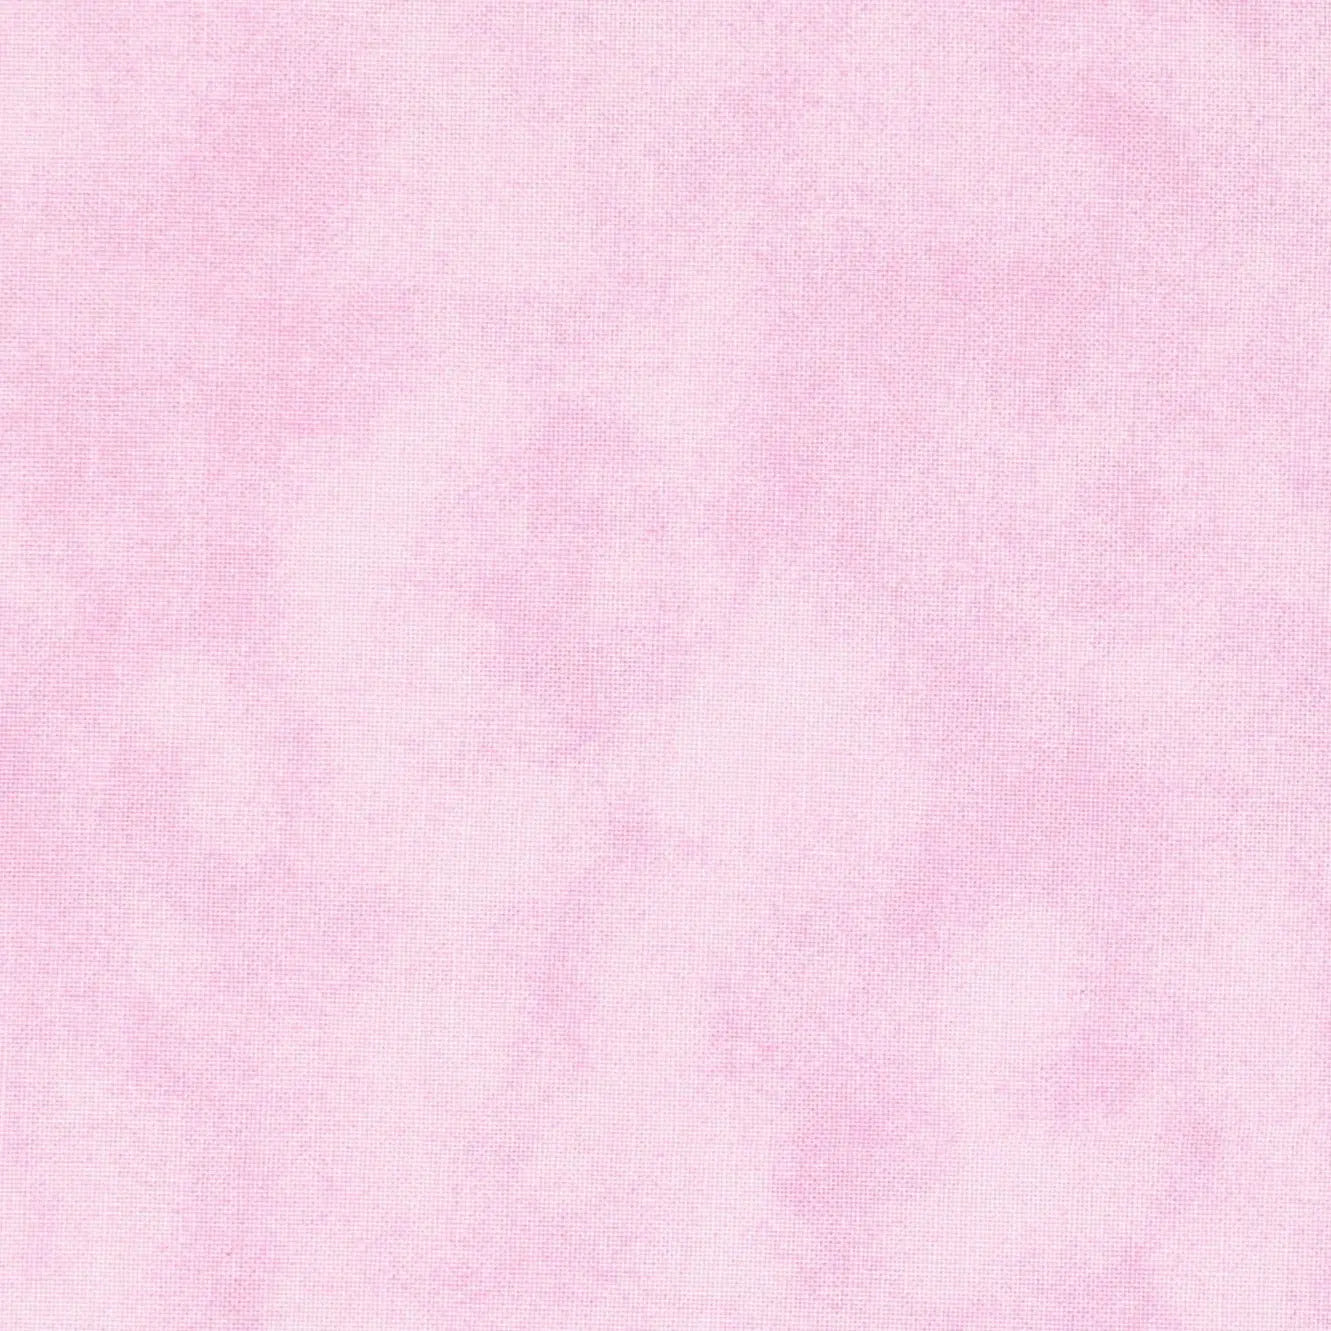 Pink Pastel Color Waves Cotton Wideback Fabric per yard